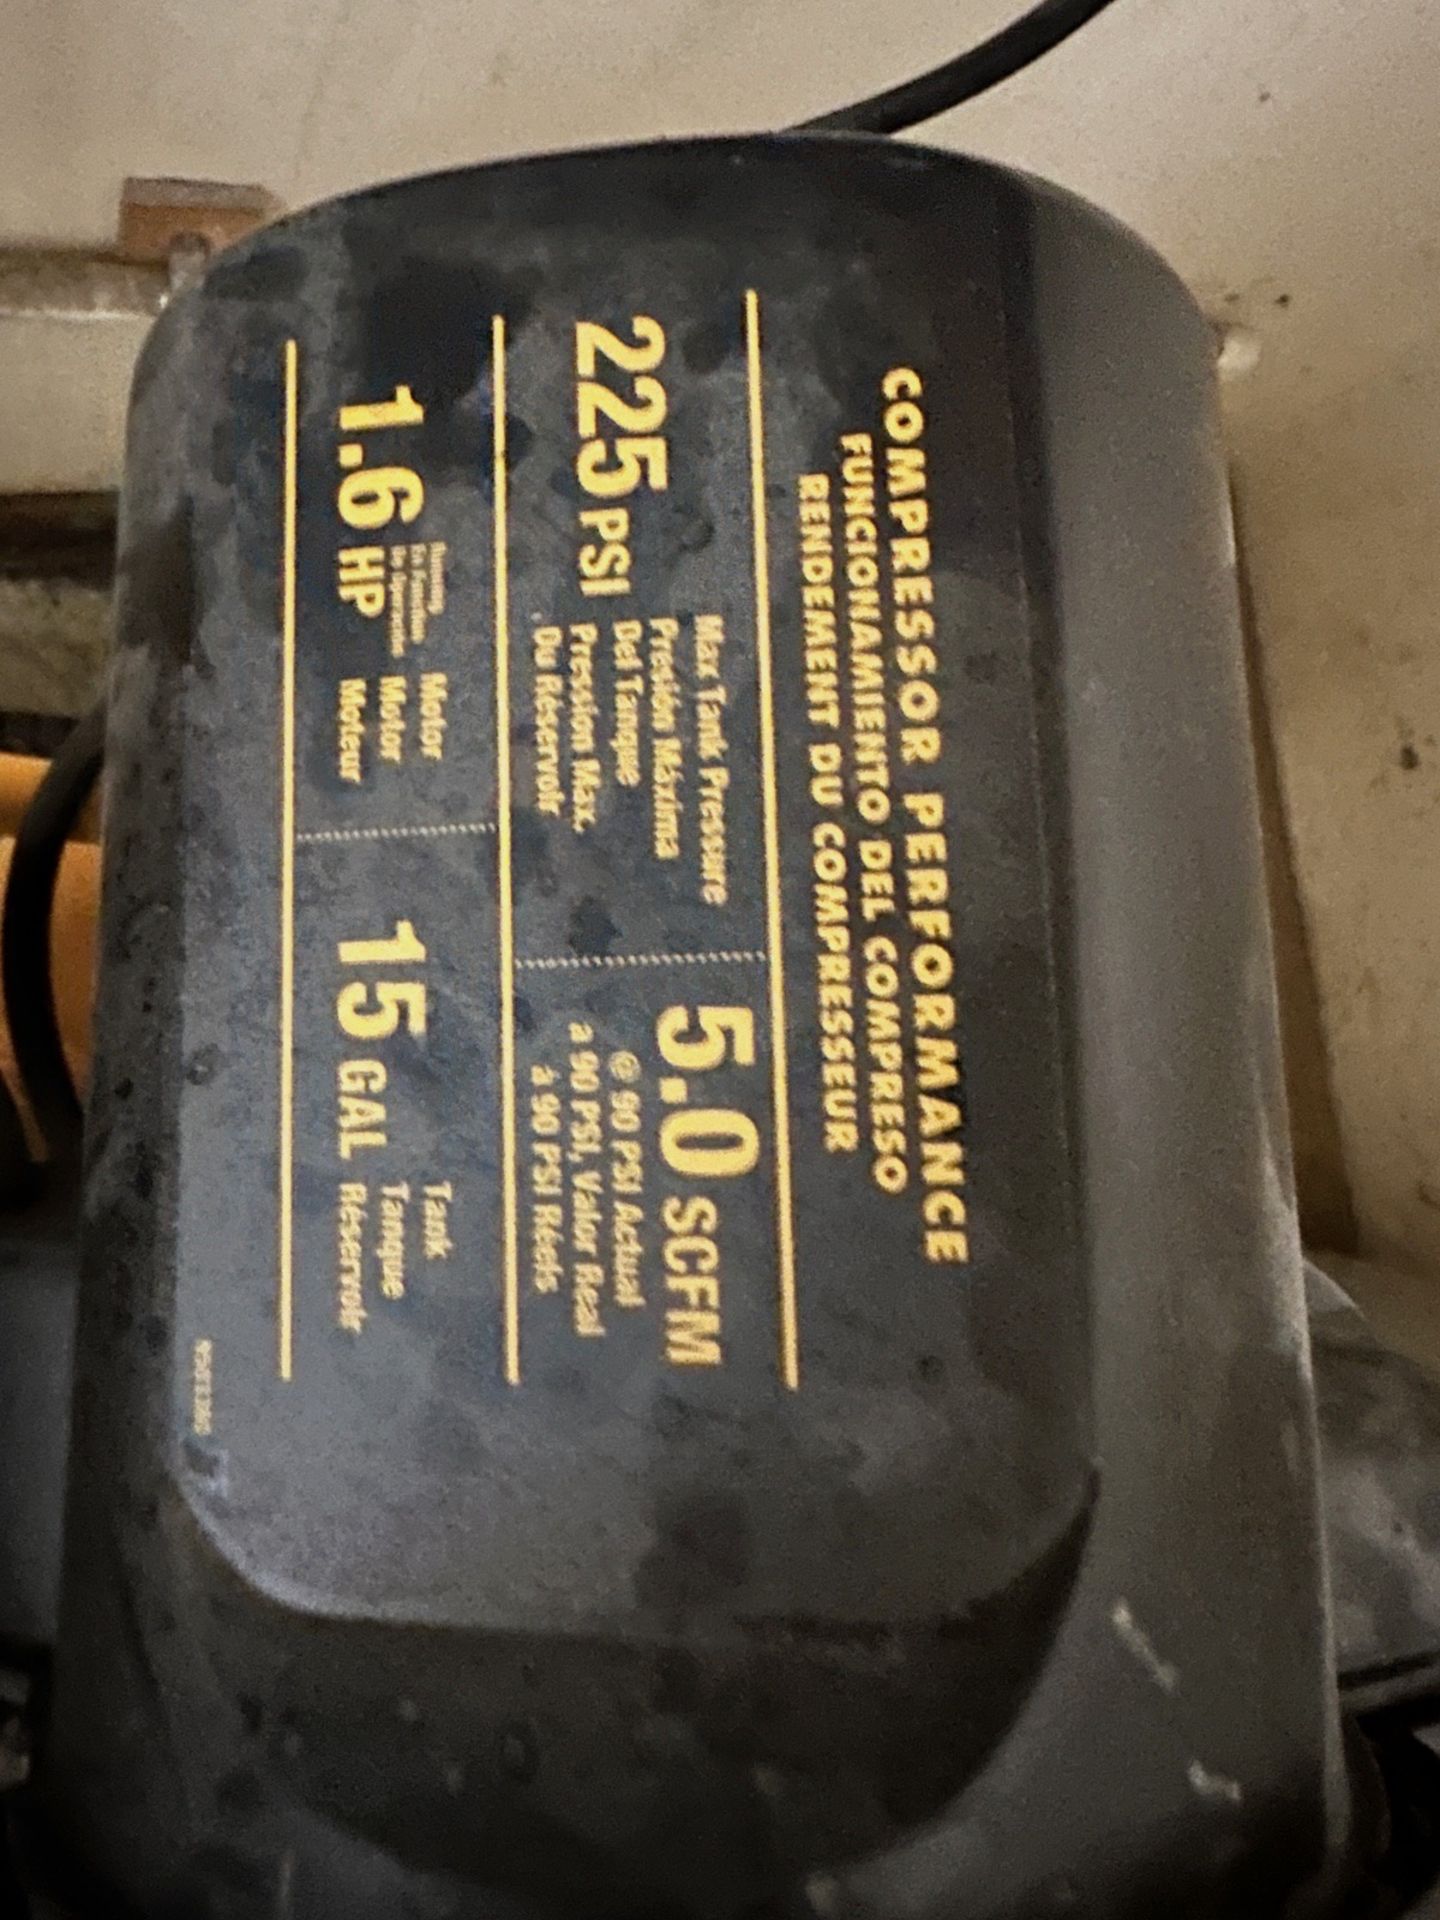 DeWalt 15 Gallon Air Compressor - Subj to Bulk | Rig Fee $35 - Image 2 of 2